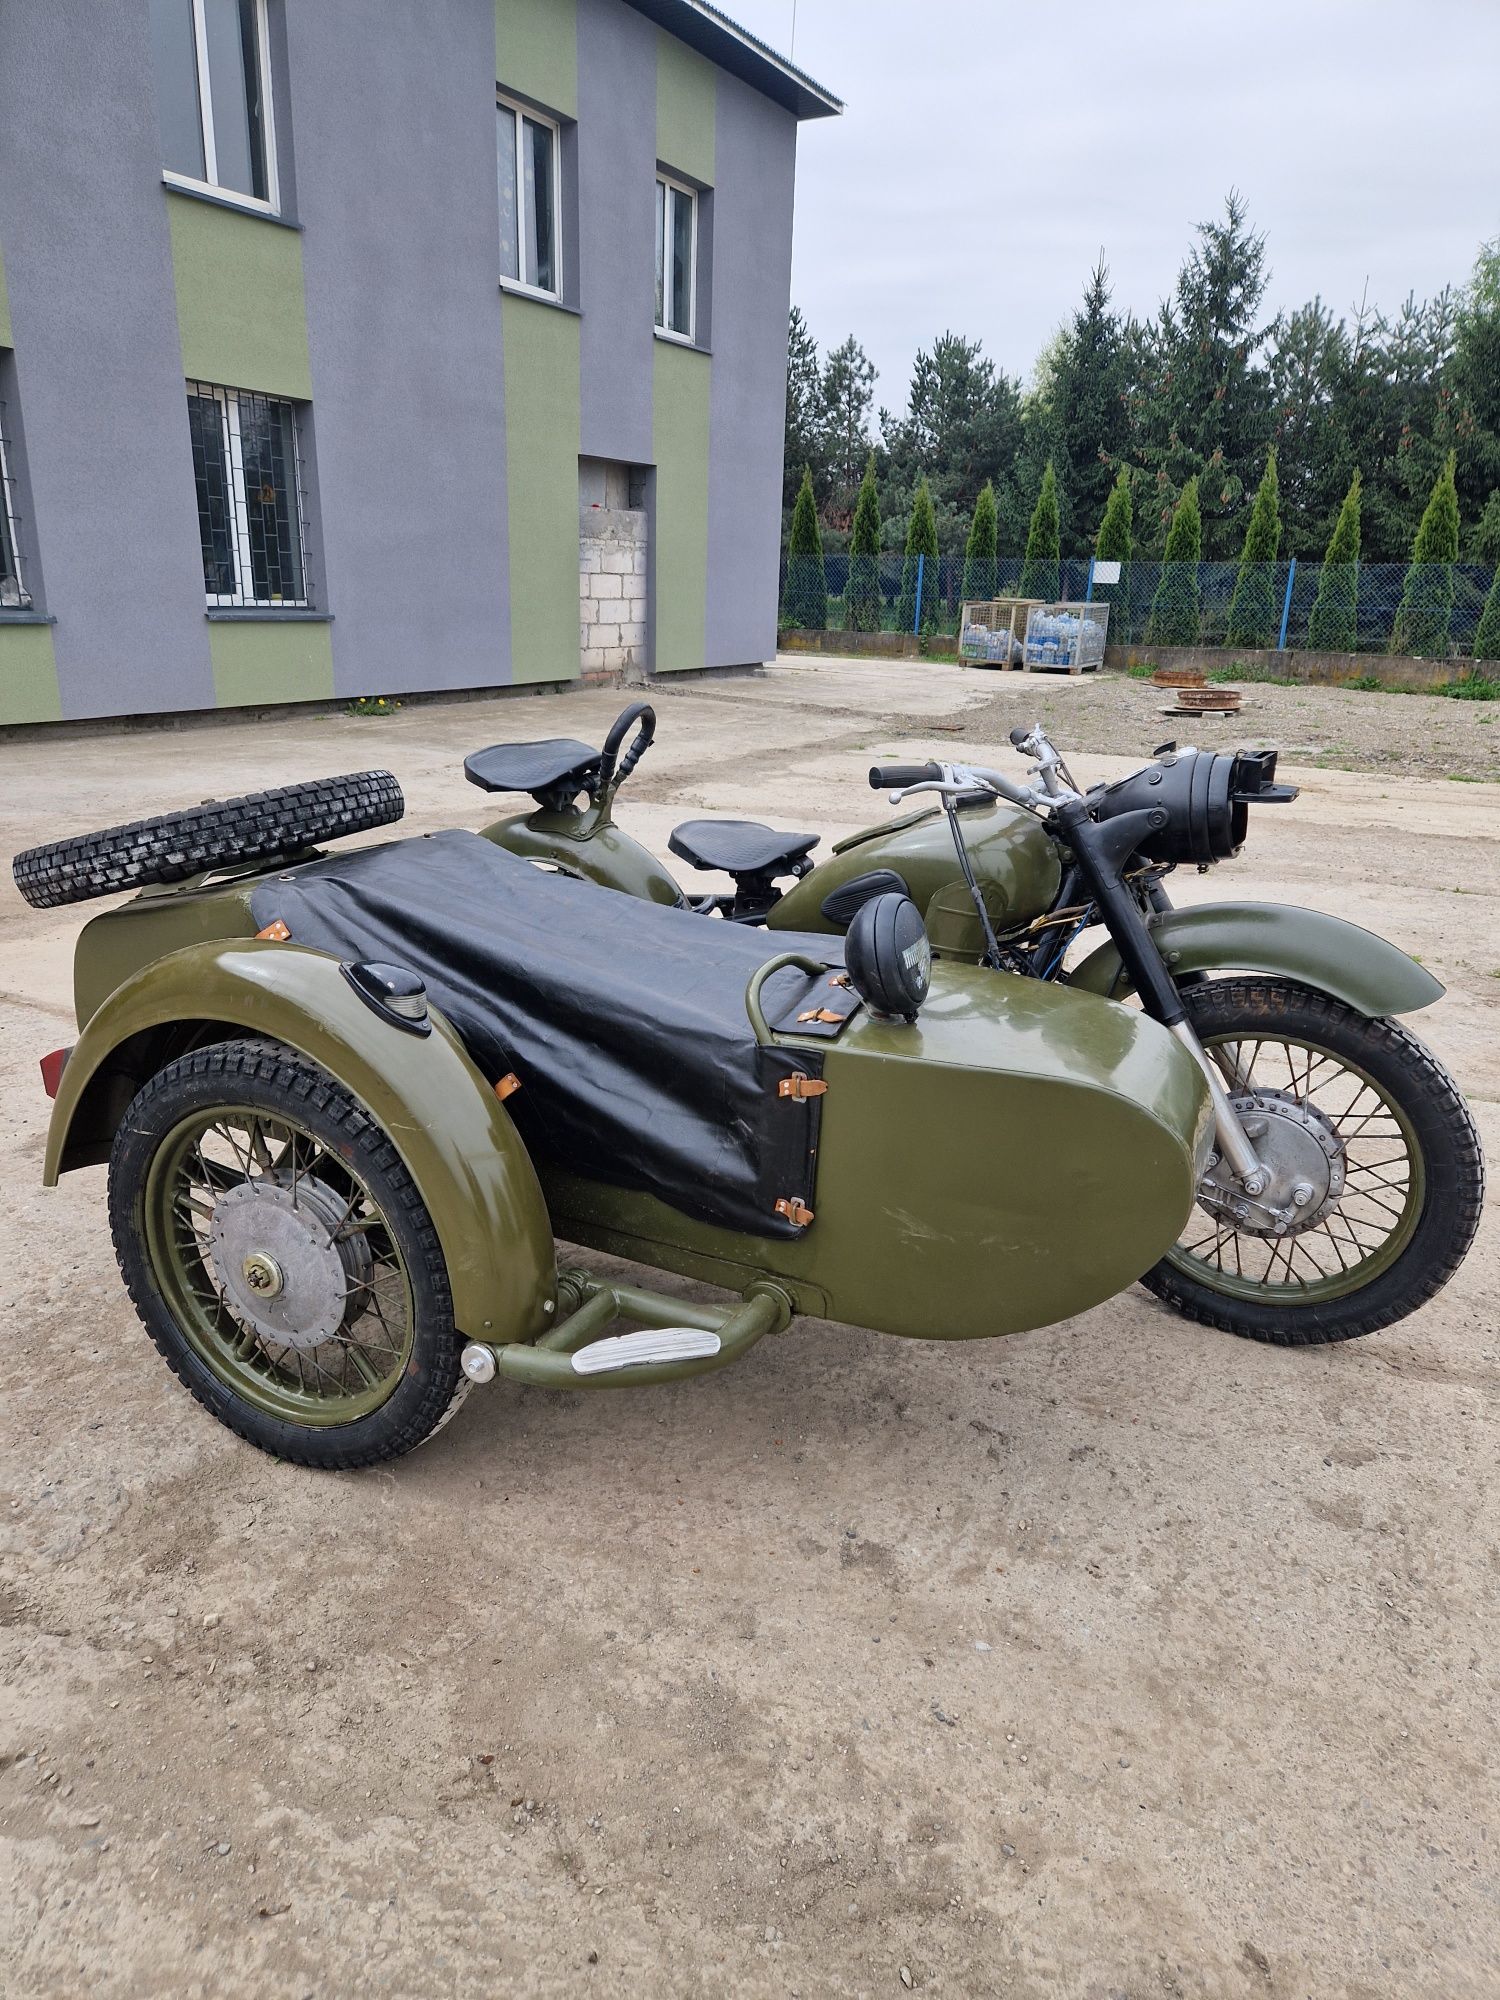 Motocykl K-750 Bezpośredni importer